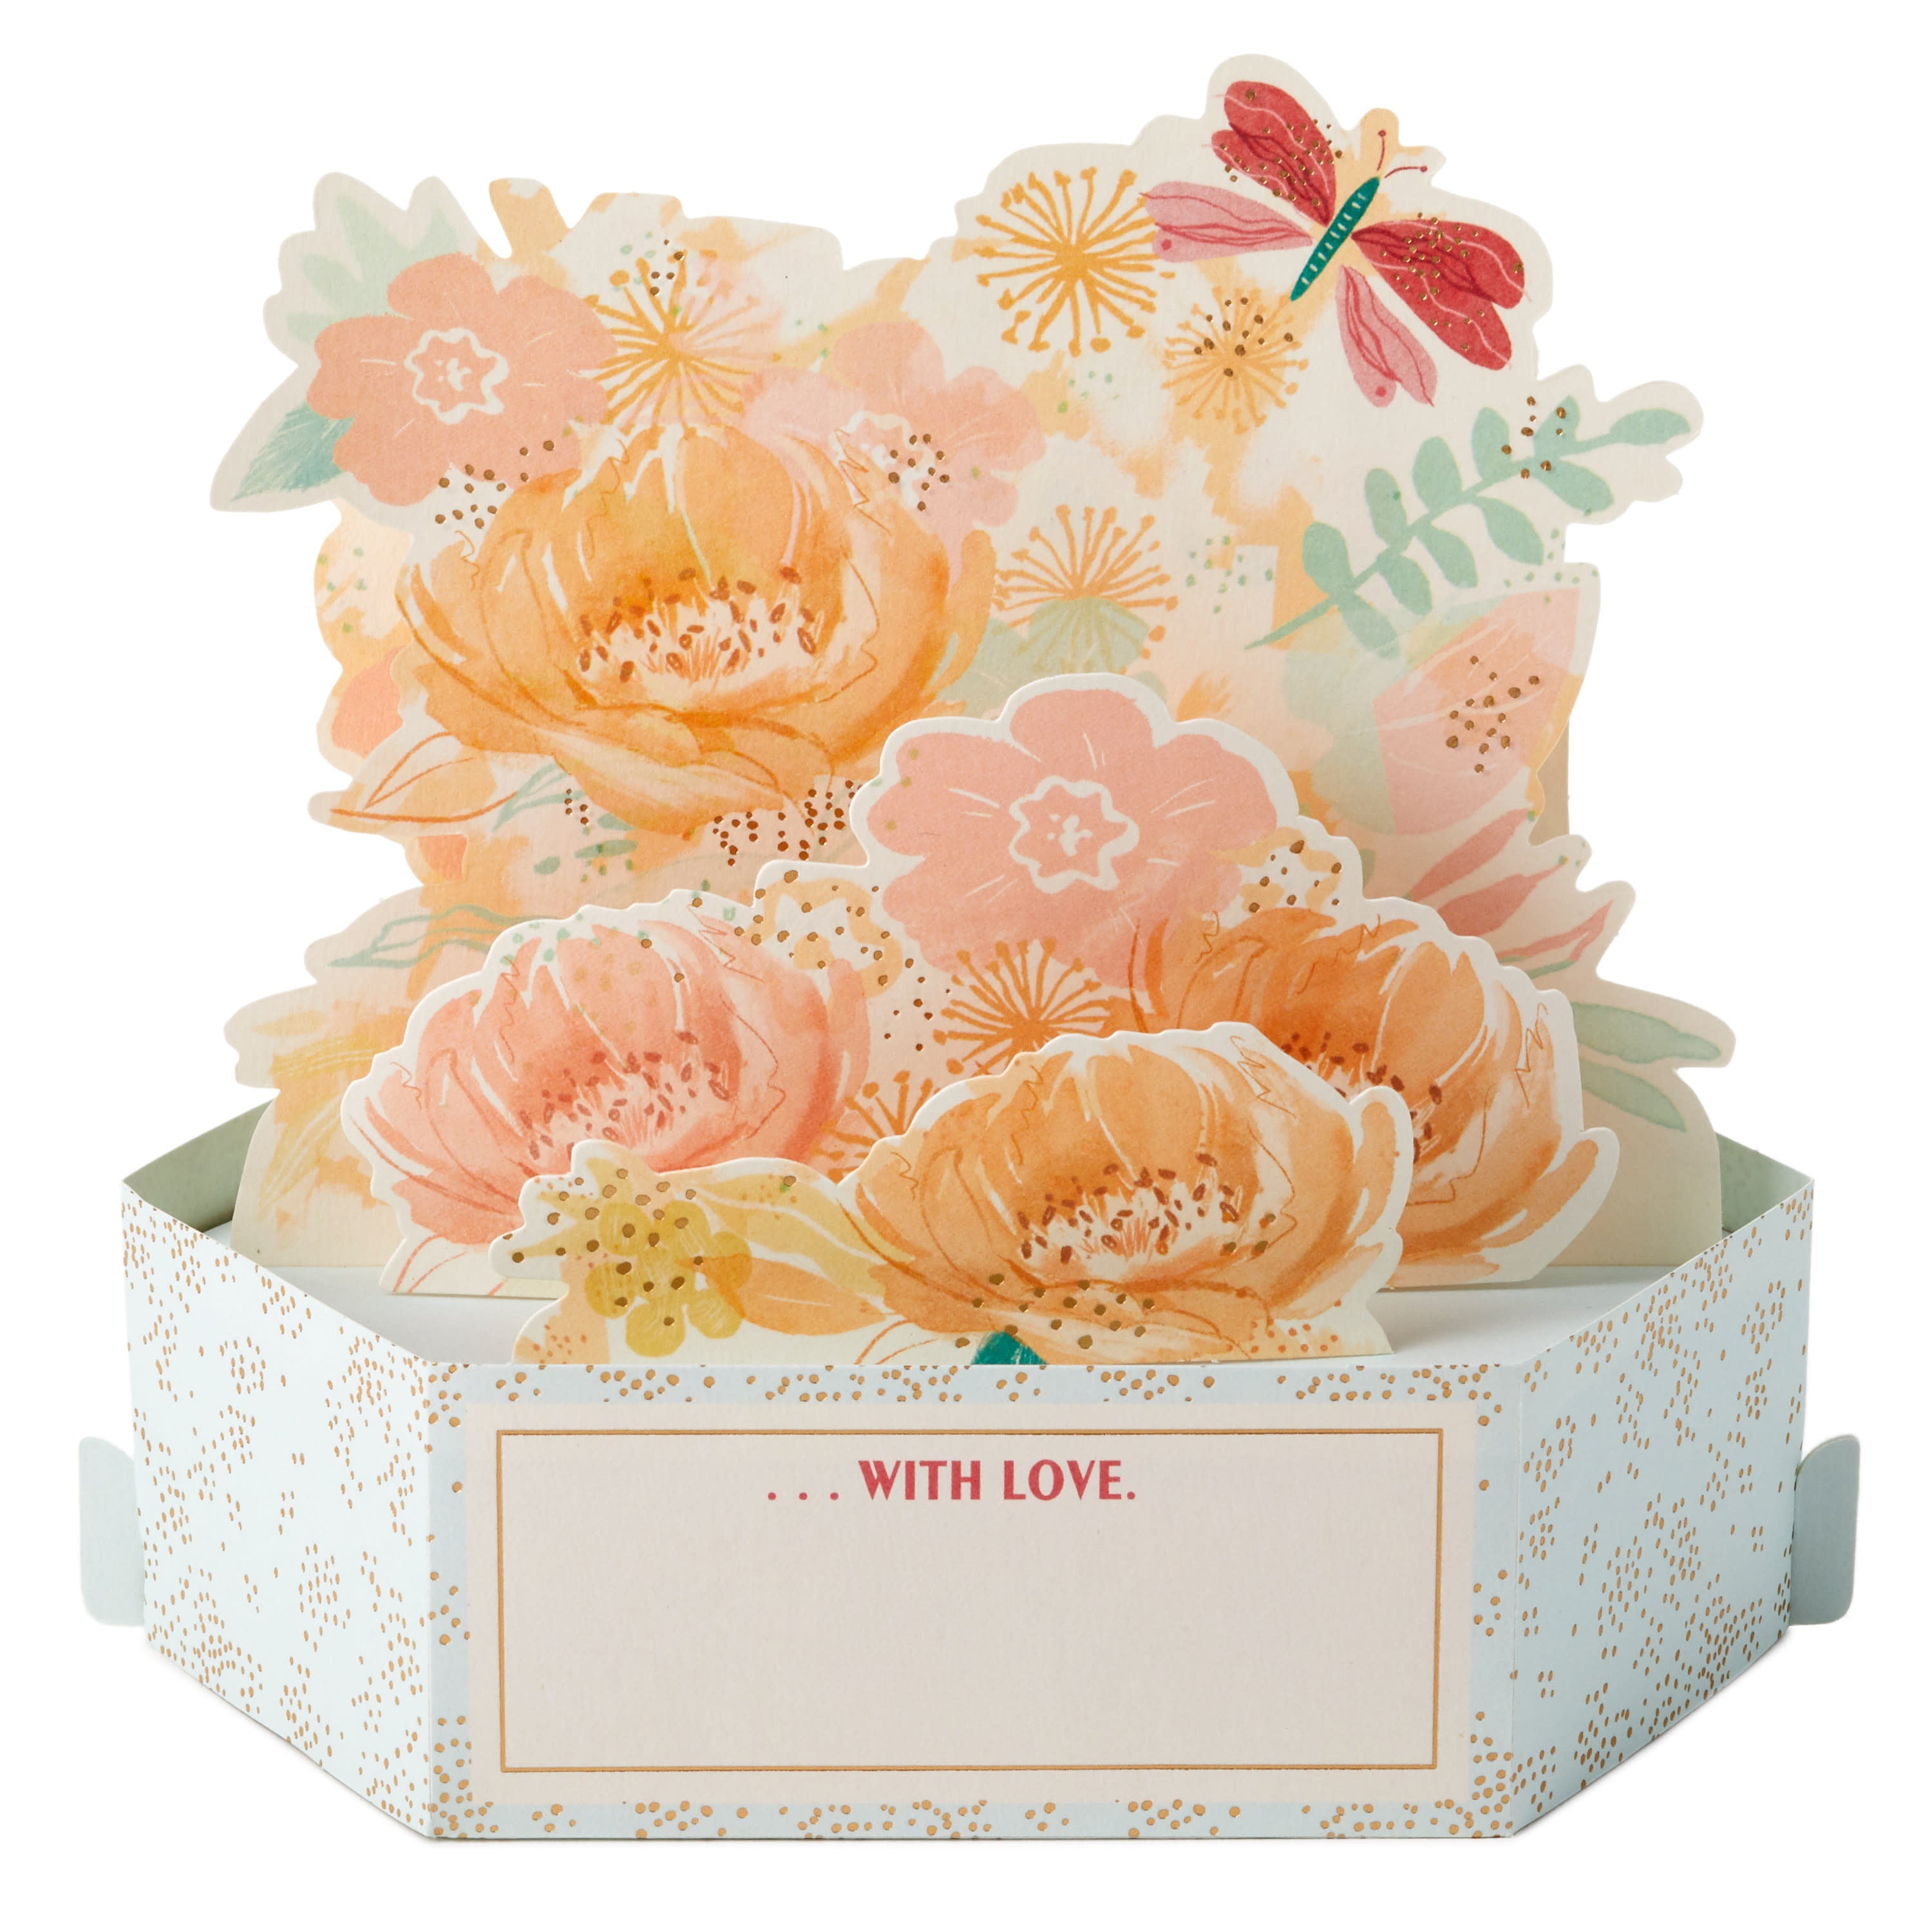 Hallmark Paper Wonder Displayable Pop Up Mothers Day Card (Pink Flowers)